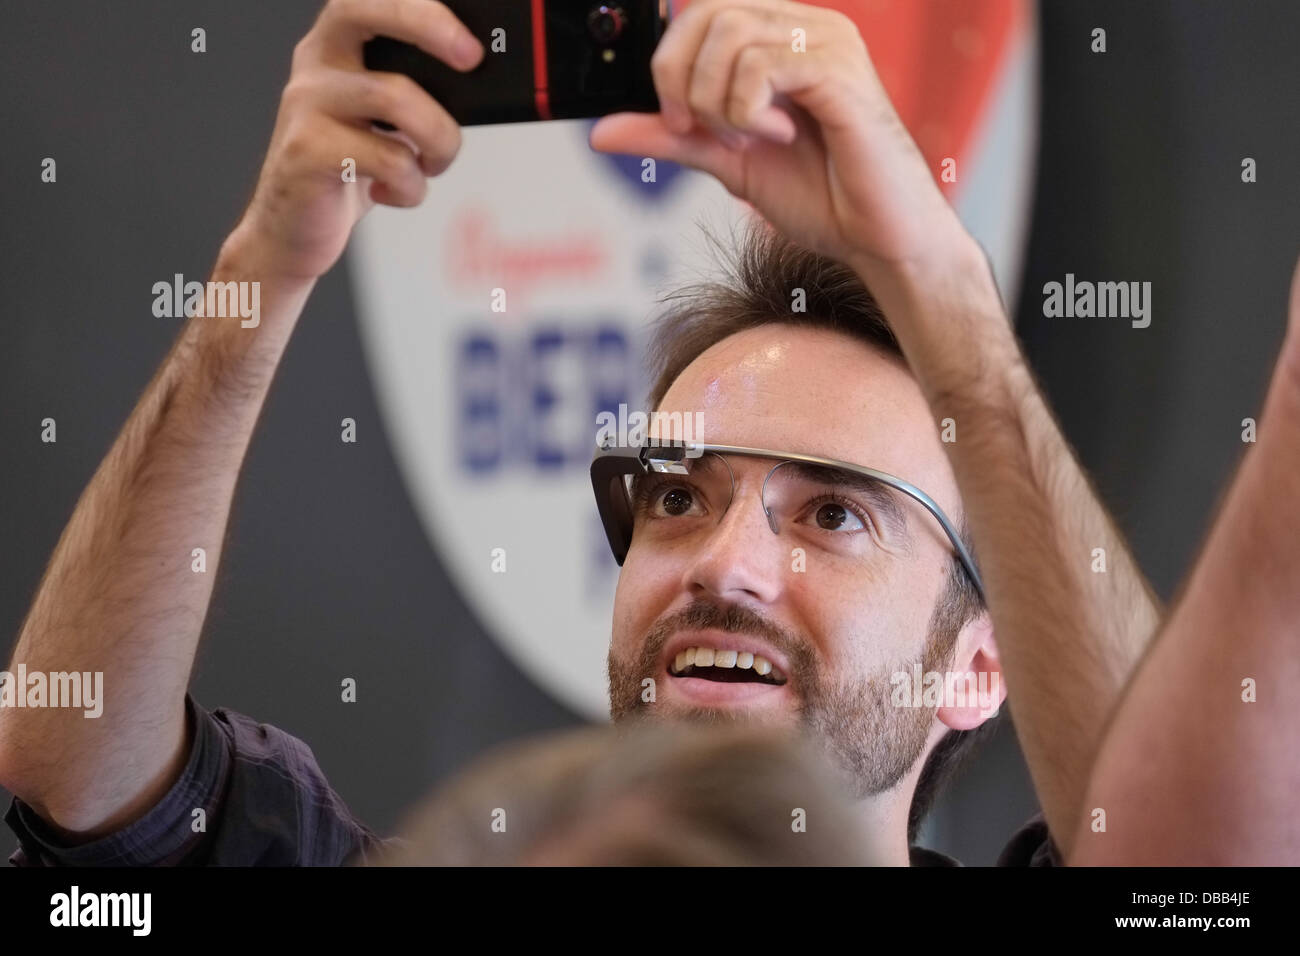 Man wearing Google Glass glasses. Stock Photo